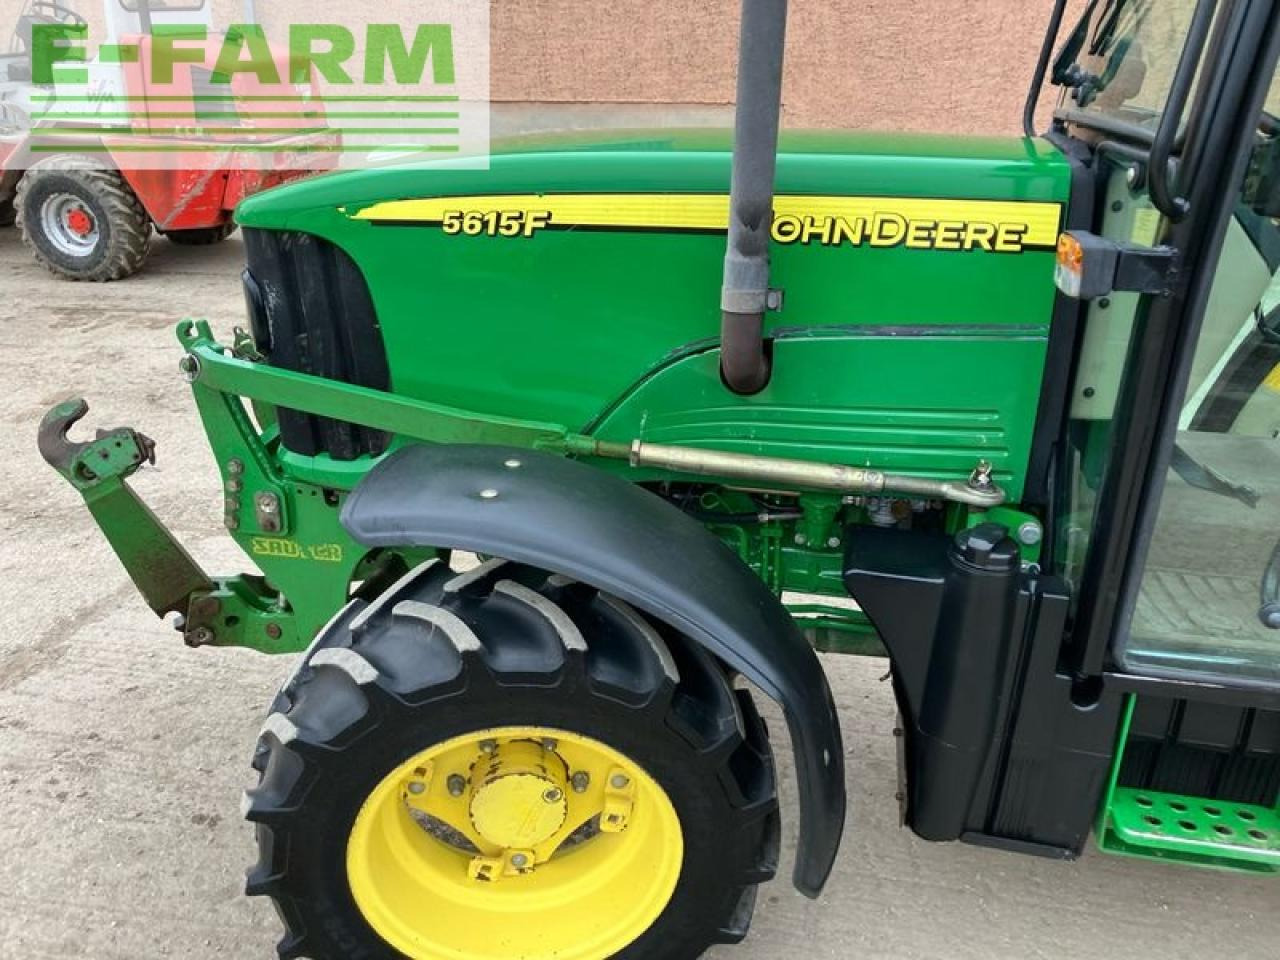 Farm tractor John Deere 5615 f: picture 8